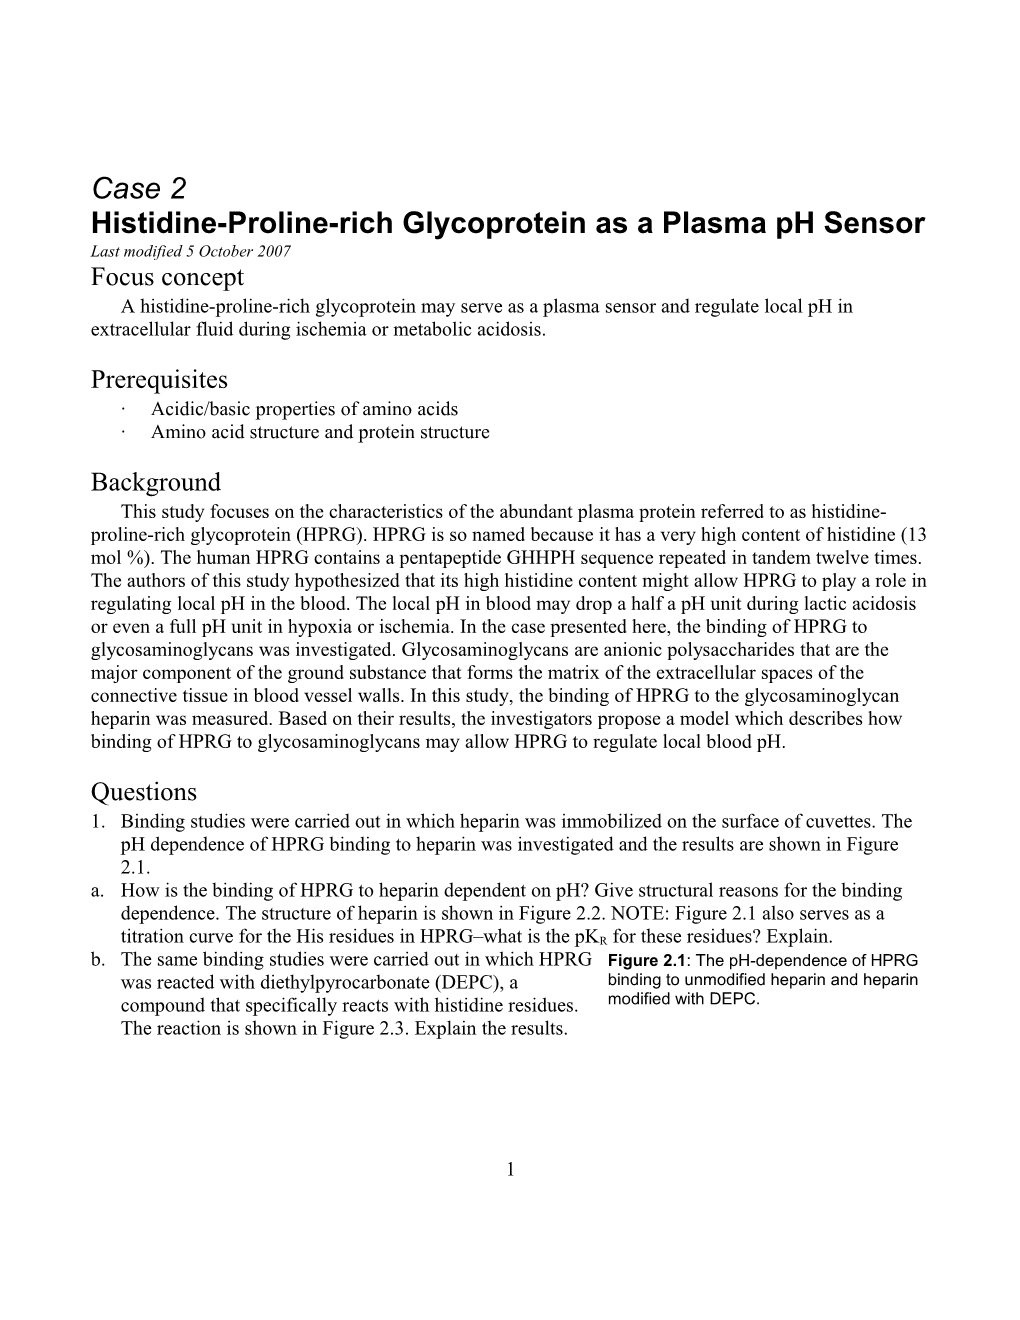 Histidine-Proline-Rich Glycoprotein As a Plasma Ph Sensor